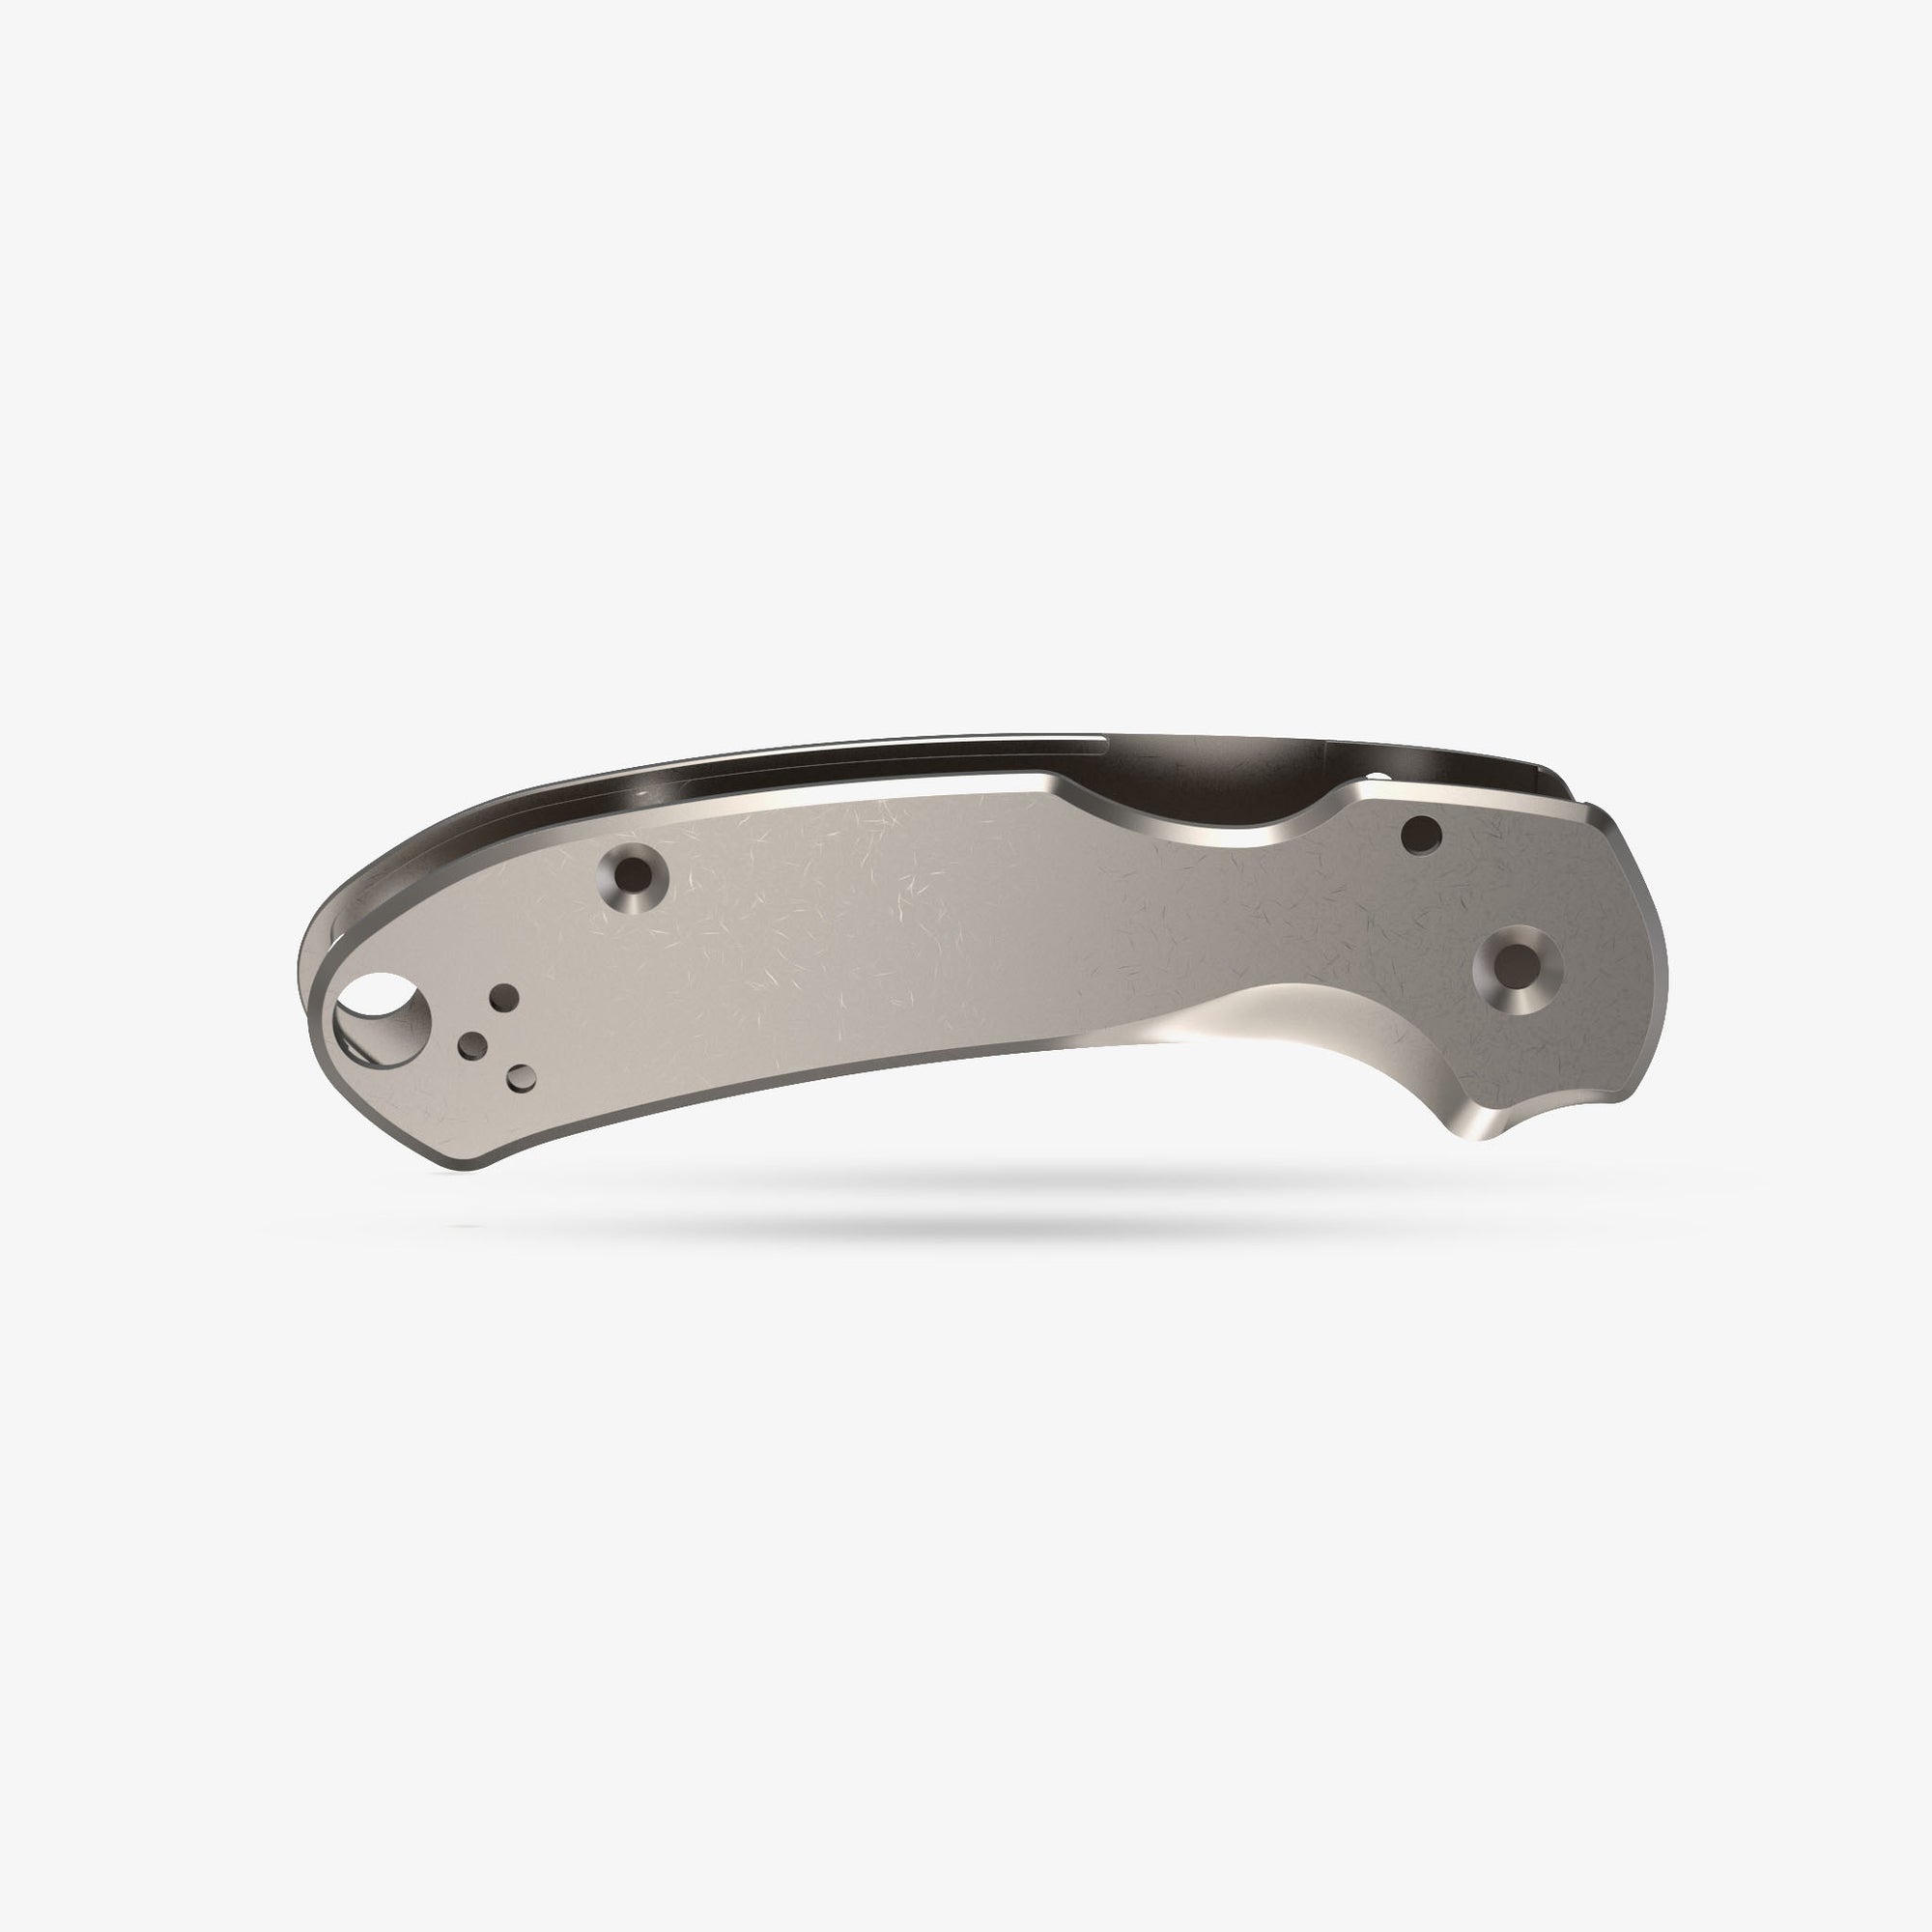 Skinny Titanium Scales for Spyderco Para 3 Knife-